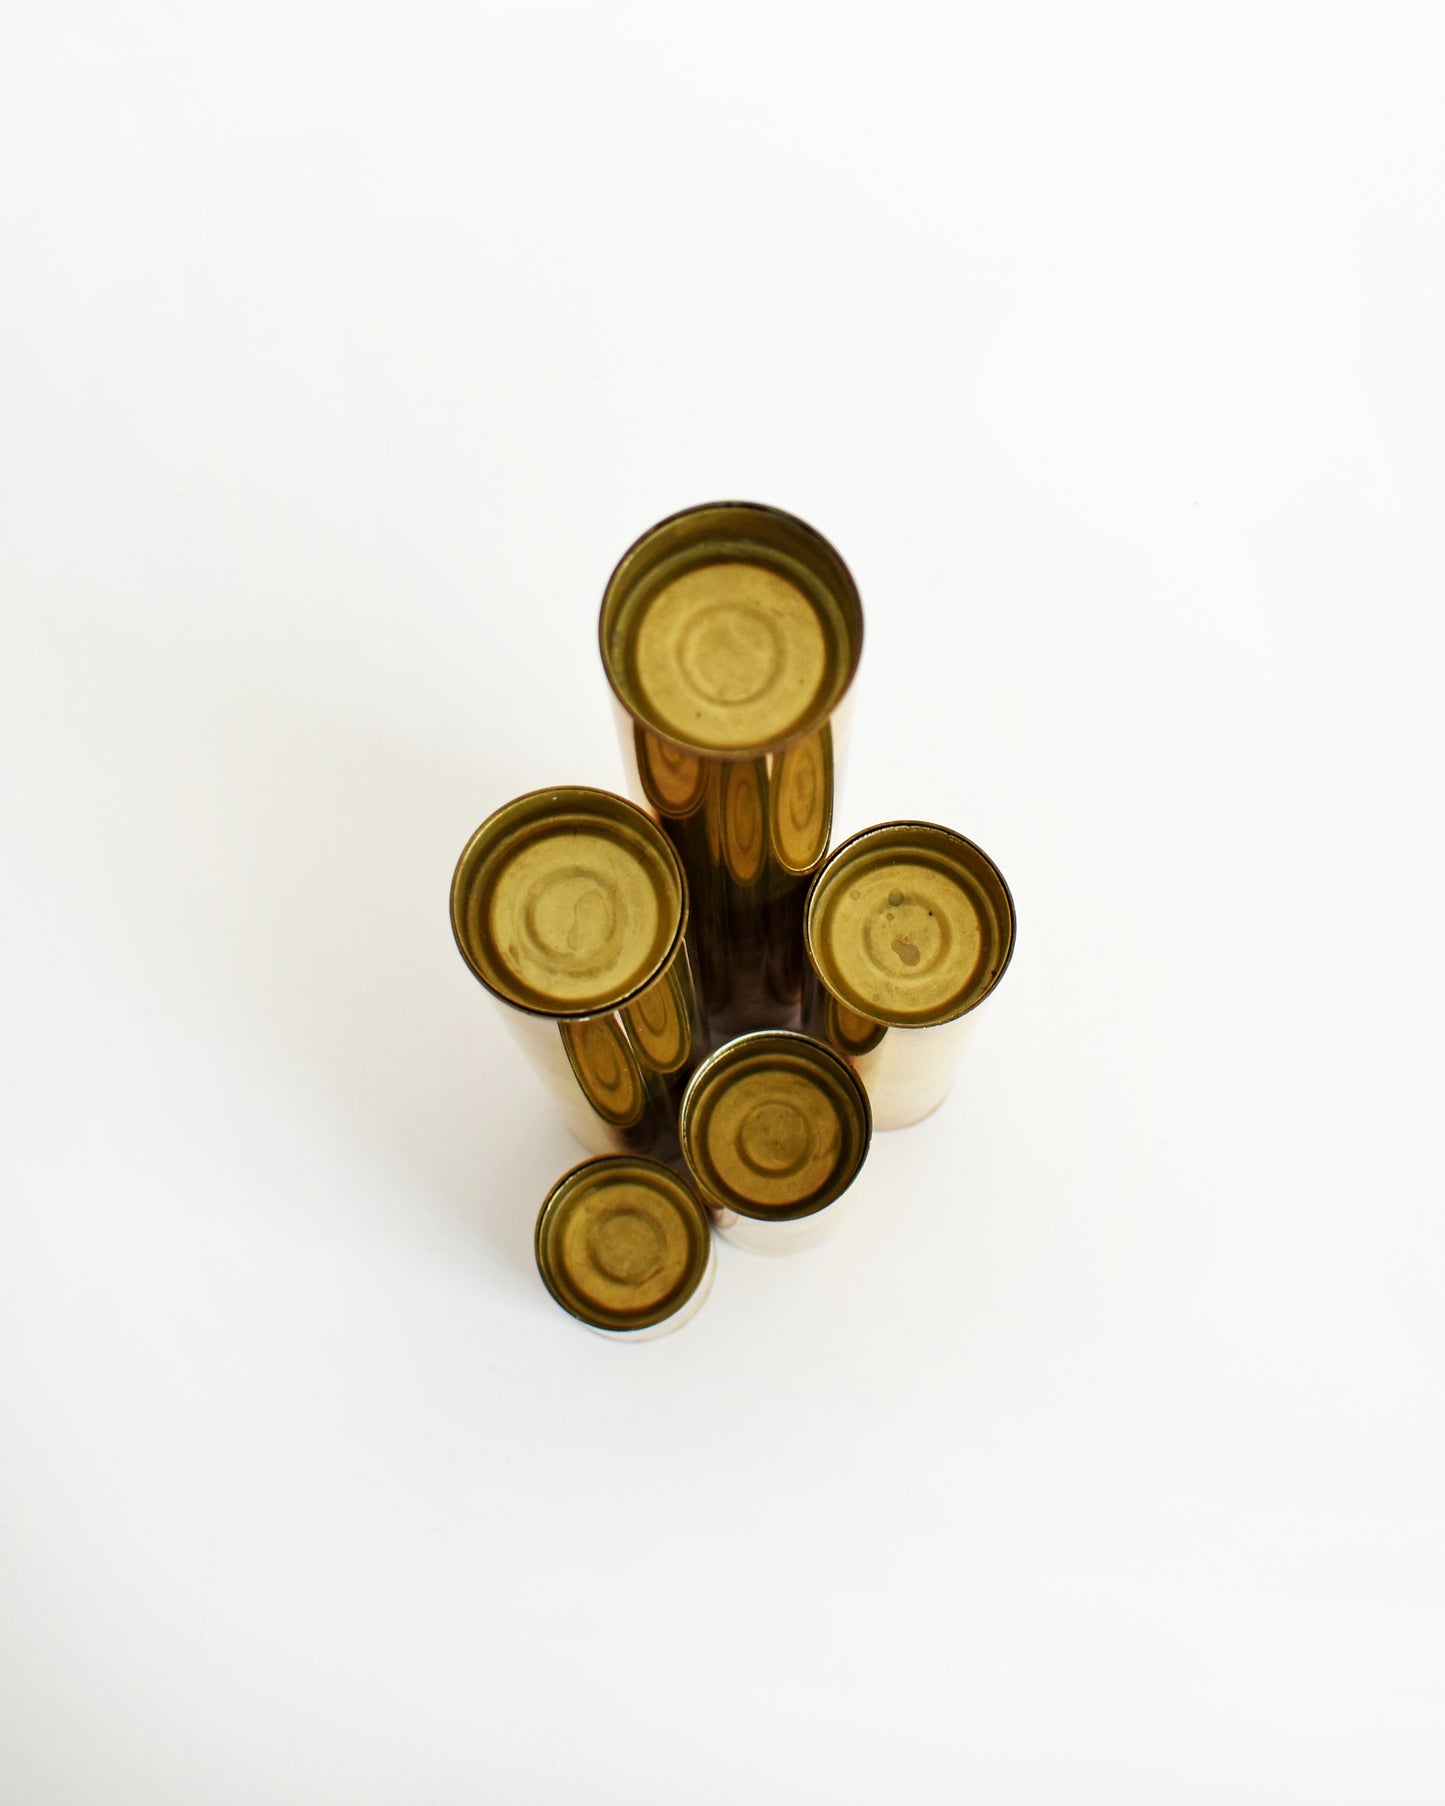 Overhead shot of five brass cylindrical candlesticks